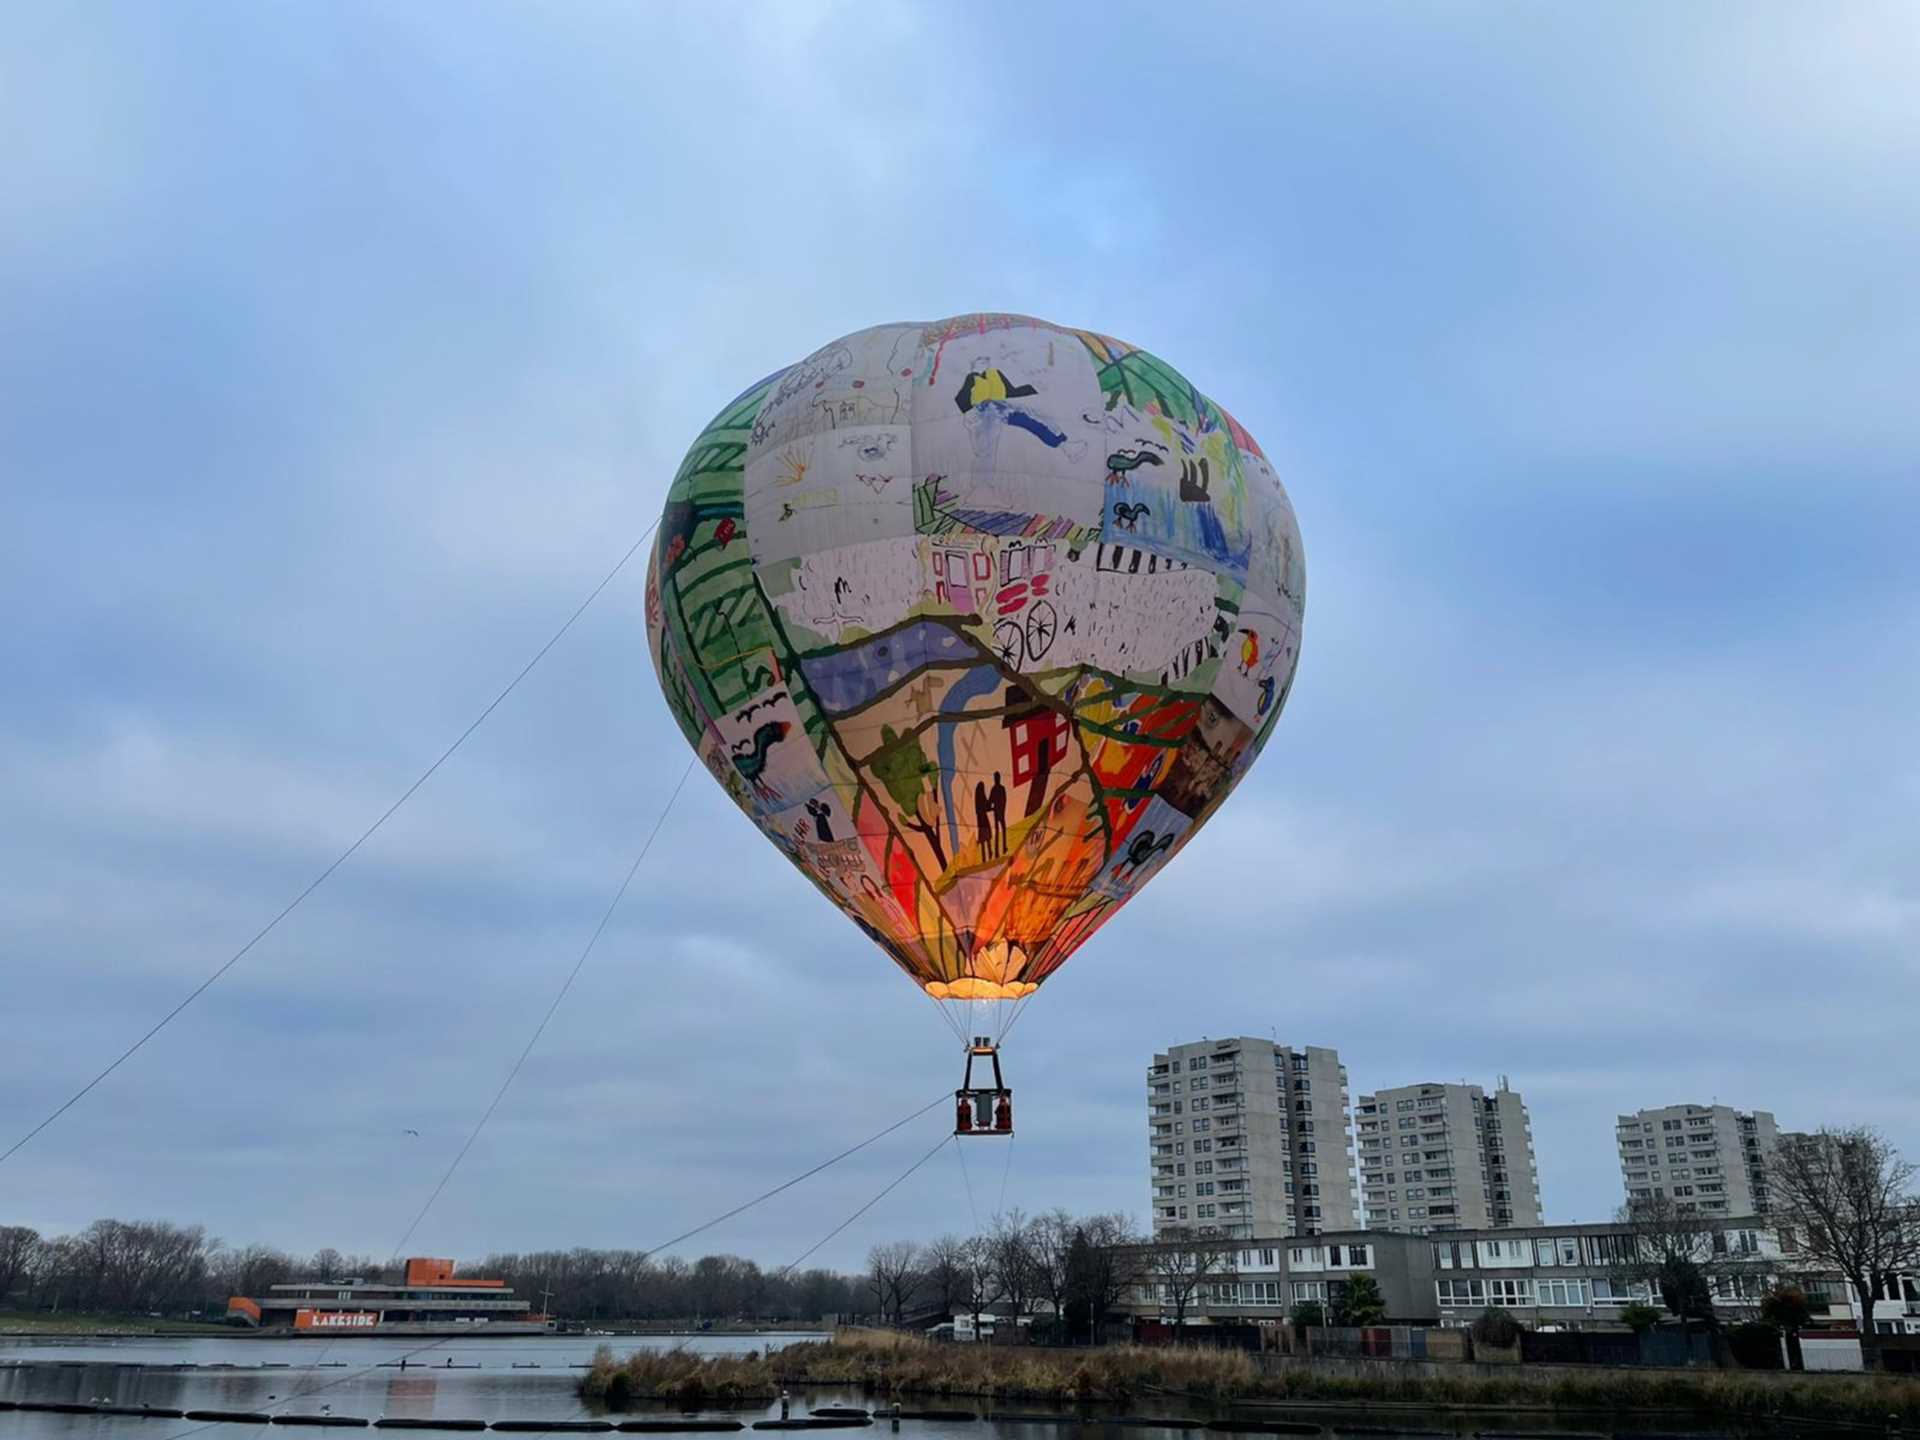 Thamesmead Balloon Flying High....